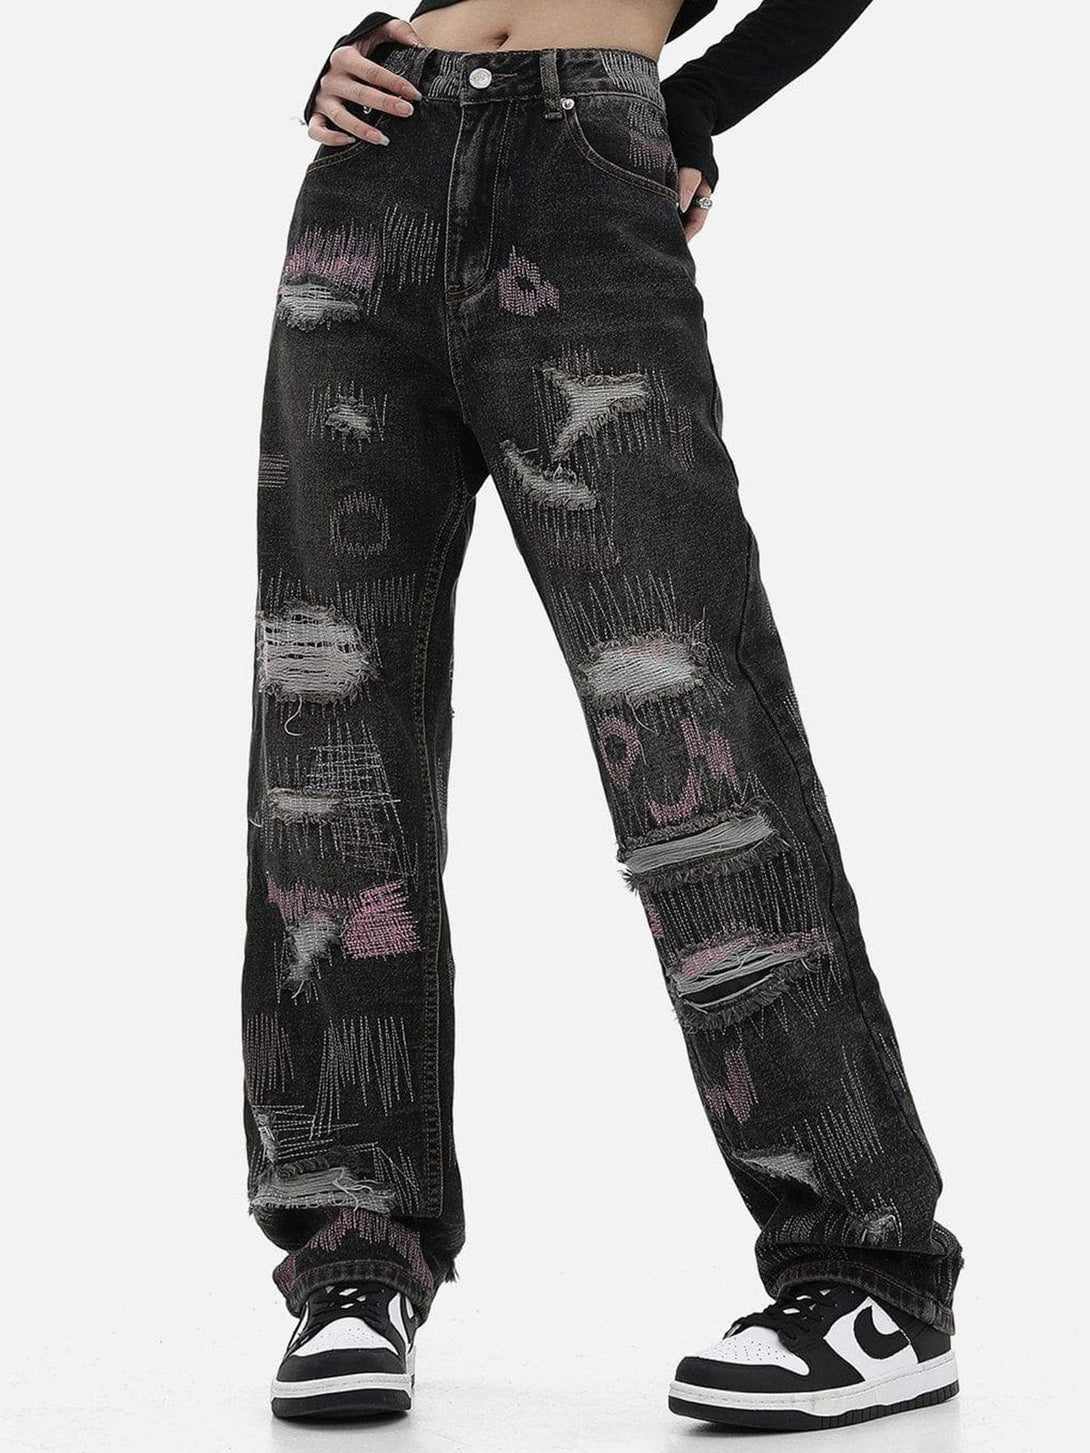 AlanBalen® - Graffiti Embroidered Ripped Jeans AlanBalen